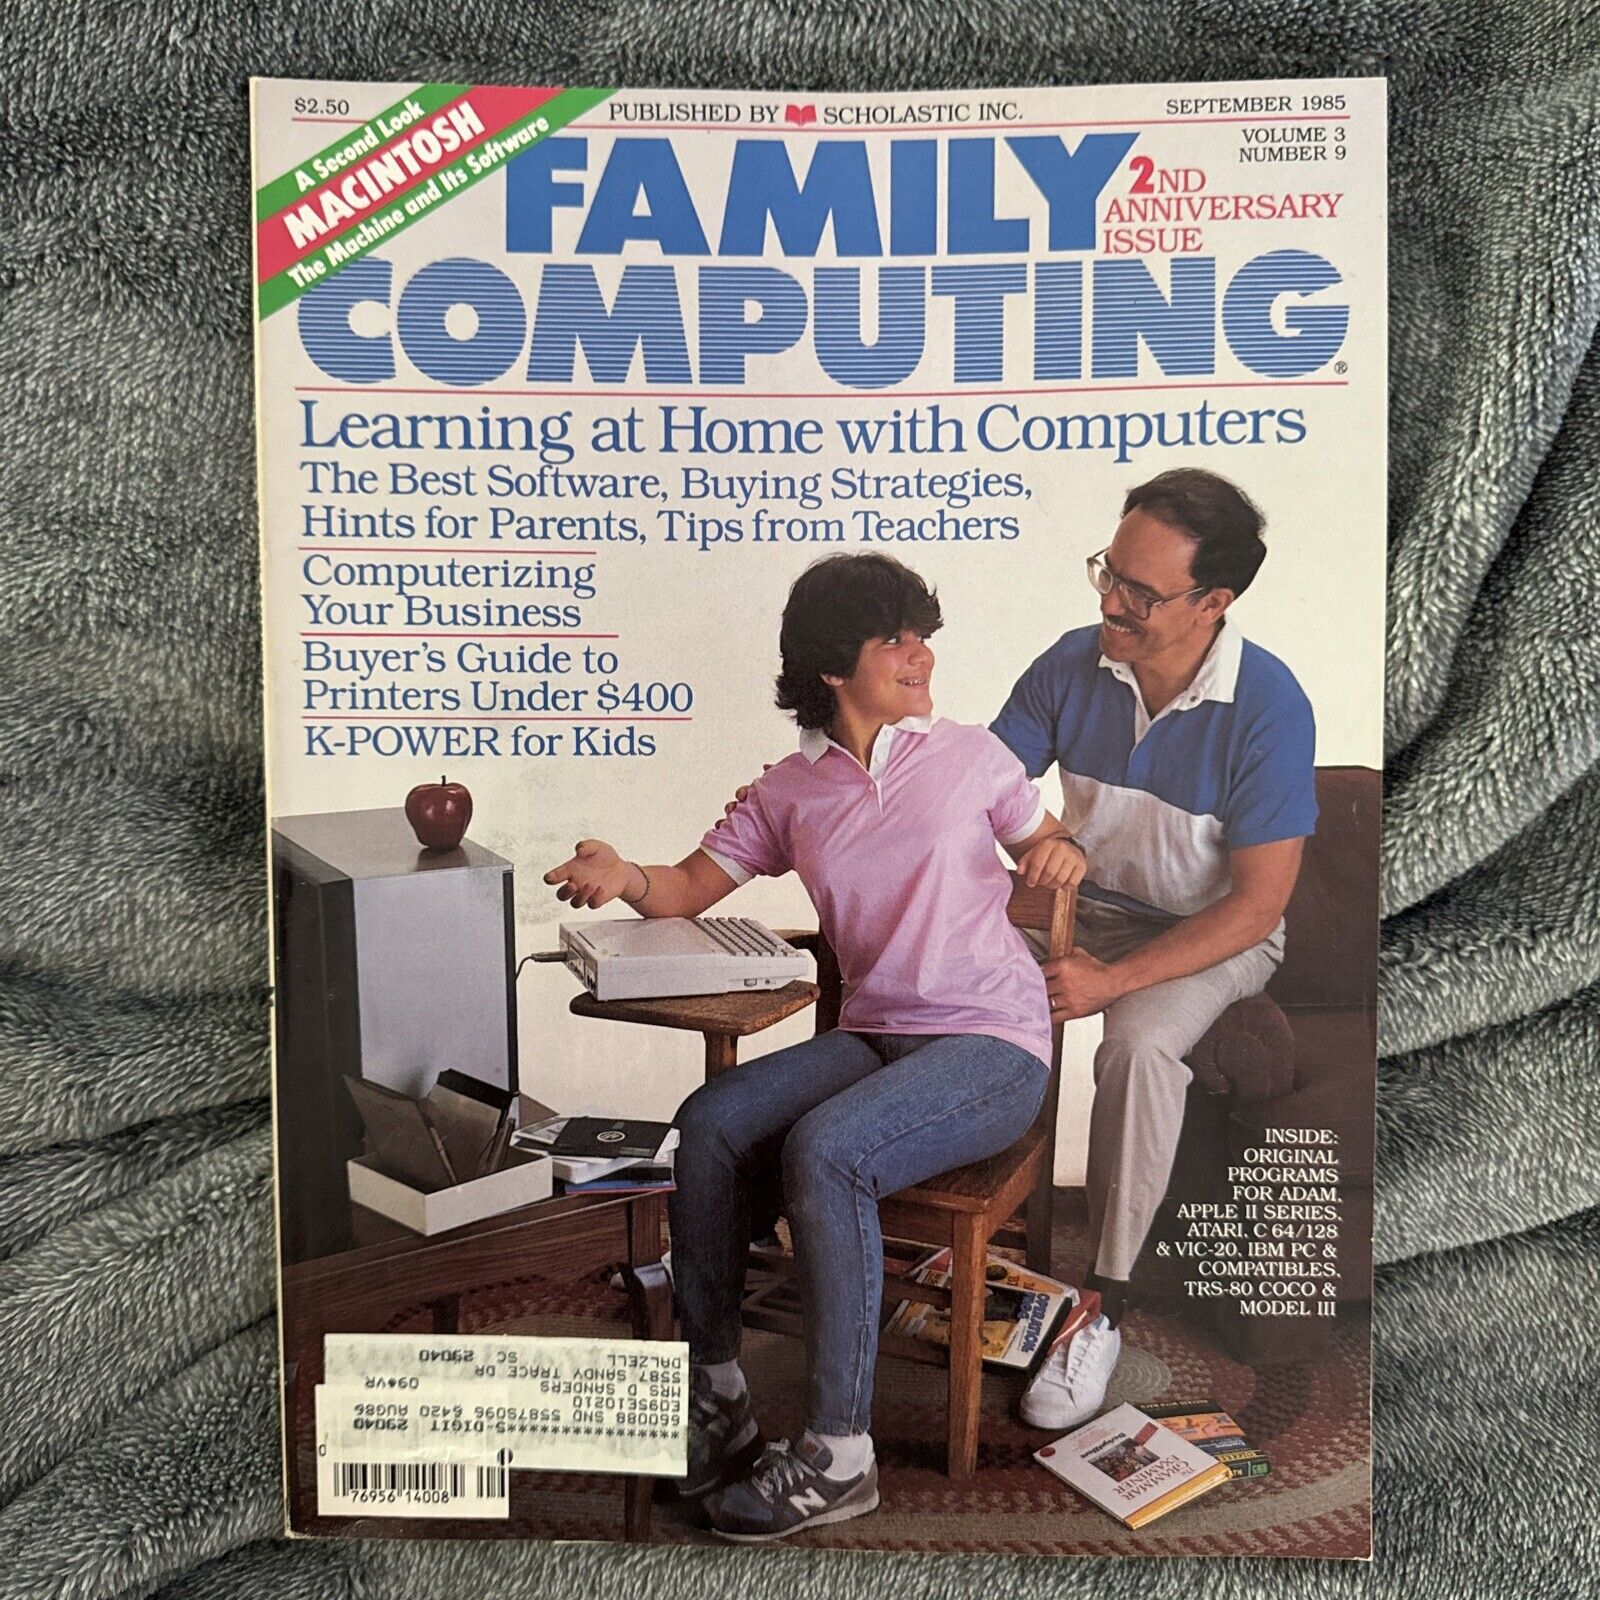 September 1985 Volume 3 Number 9 Family Computing Magazine -Macintosh Article